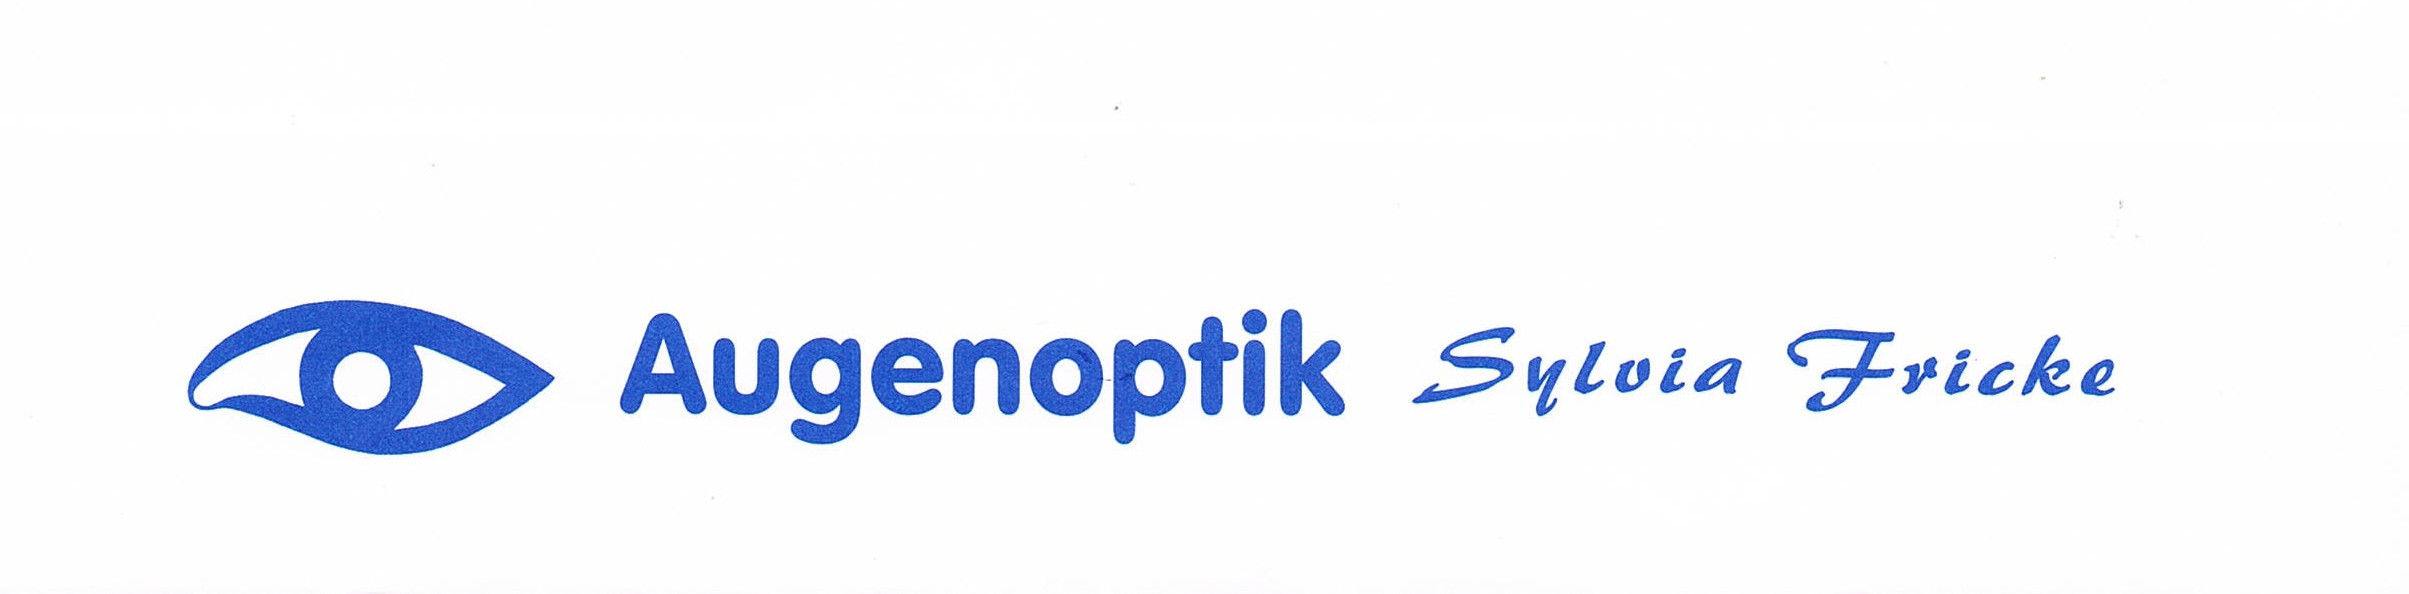 Augenoptik Sylvia Fricke Logo